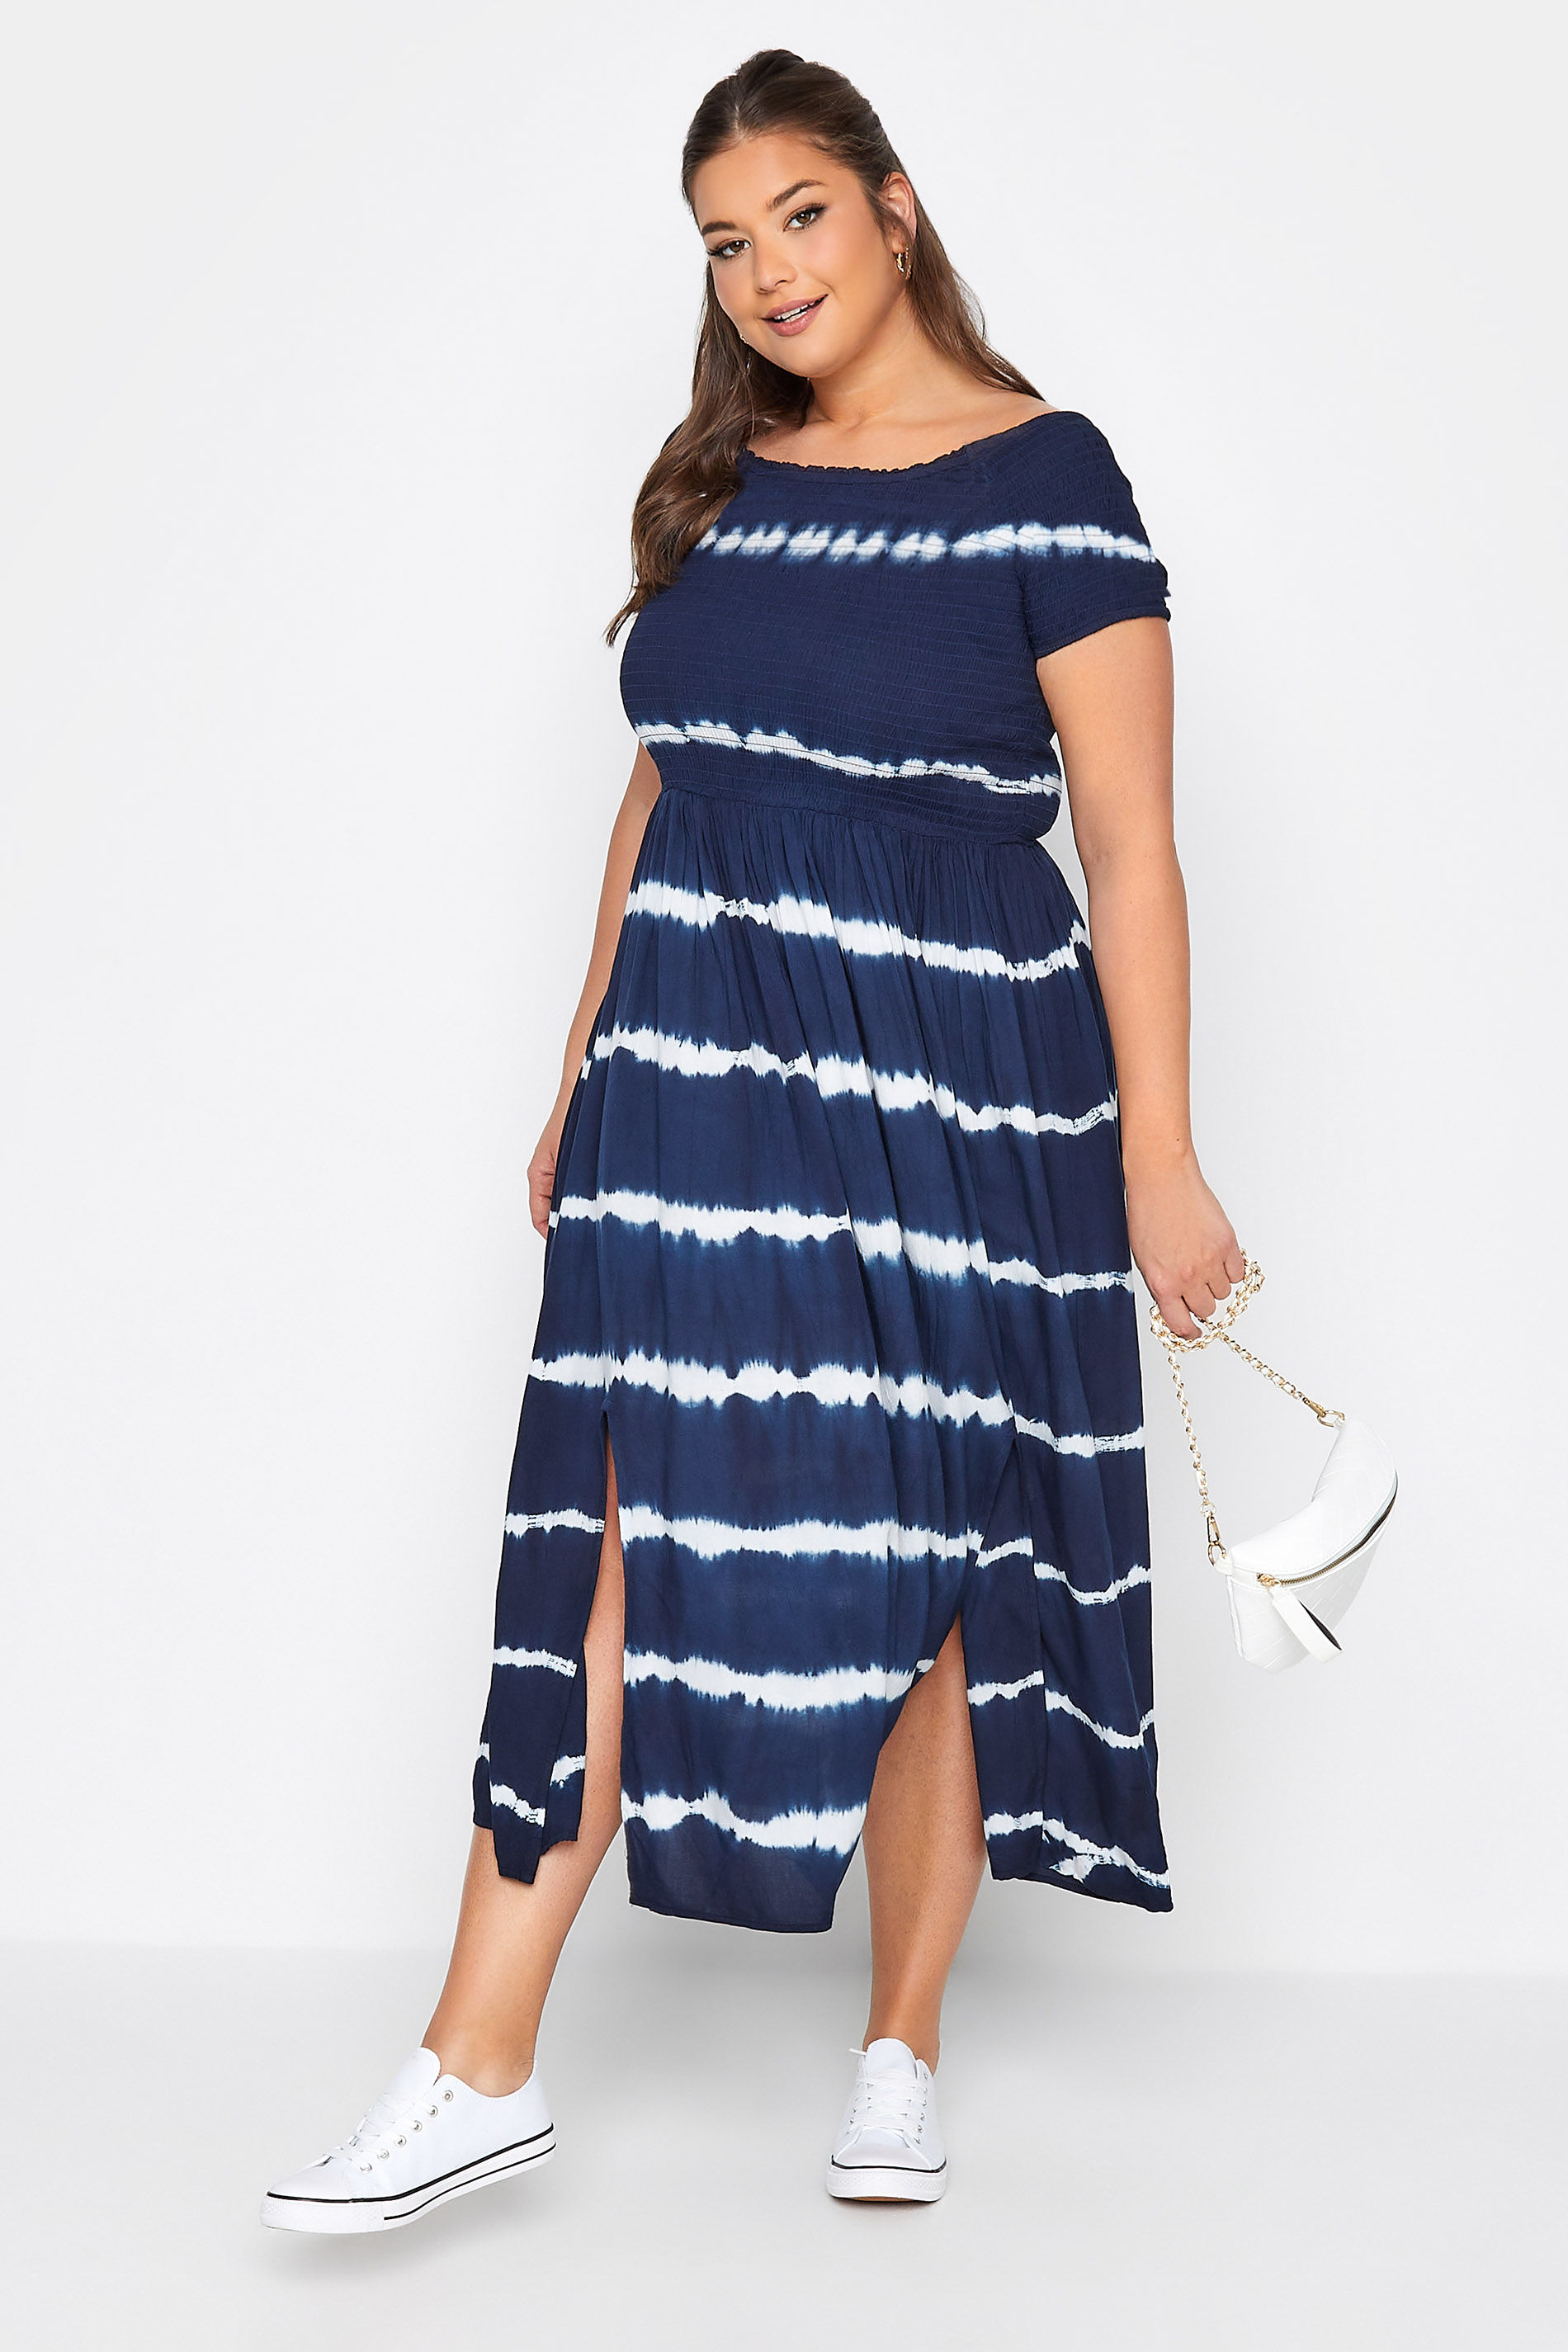 Plus Size Navy Blue Tie Dye Bardot Maxi Dress | Yours Clothing 1